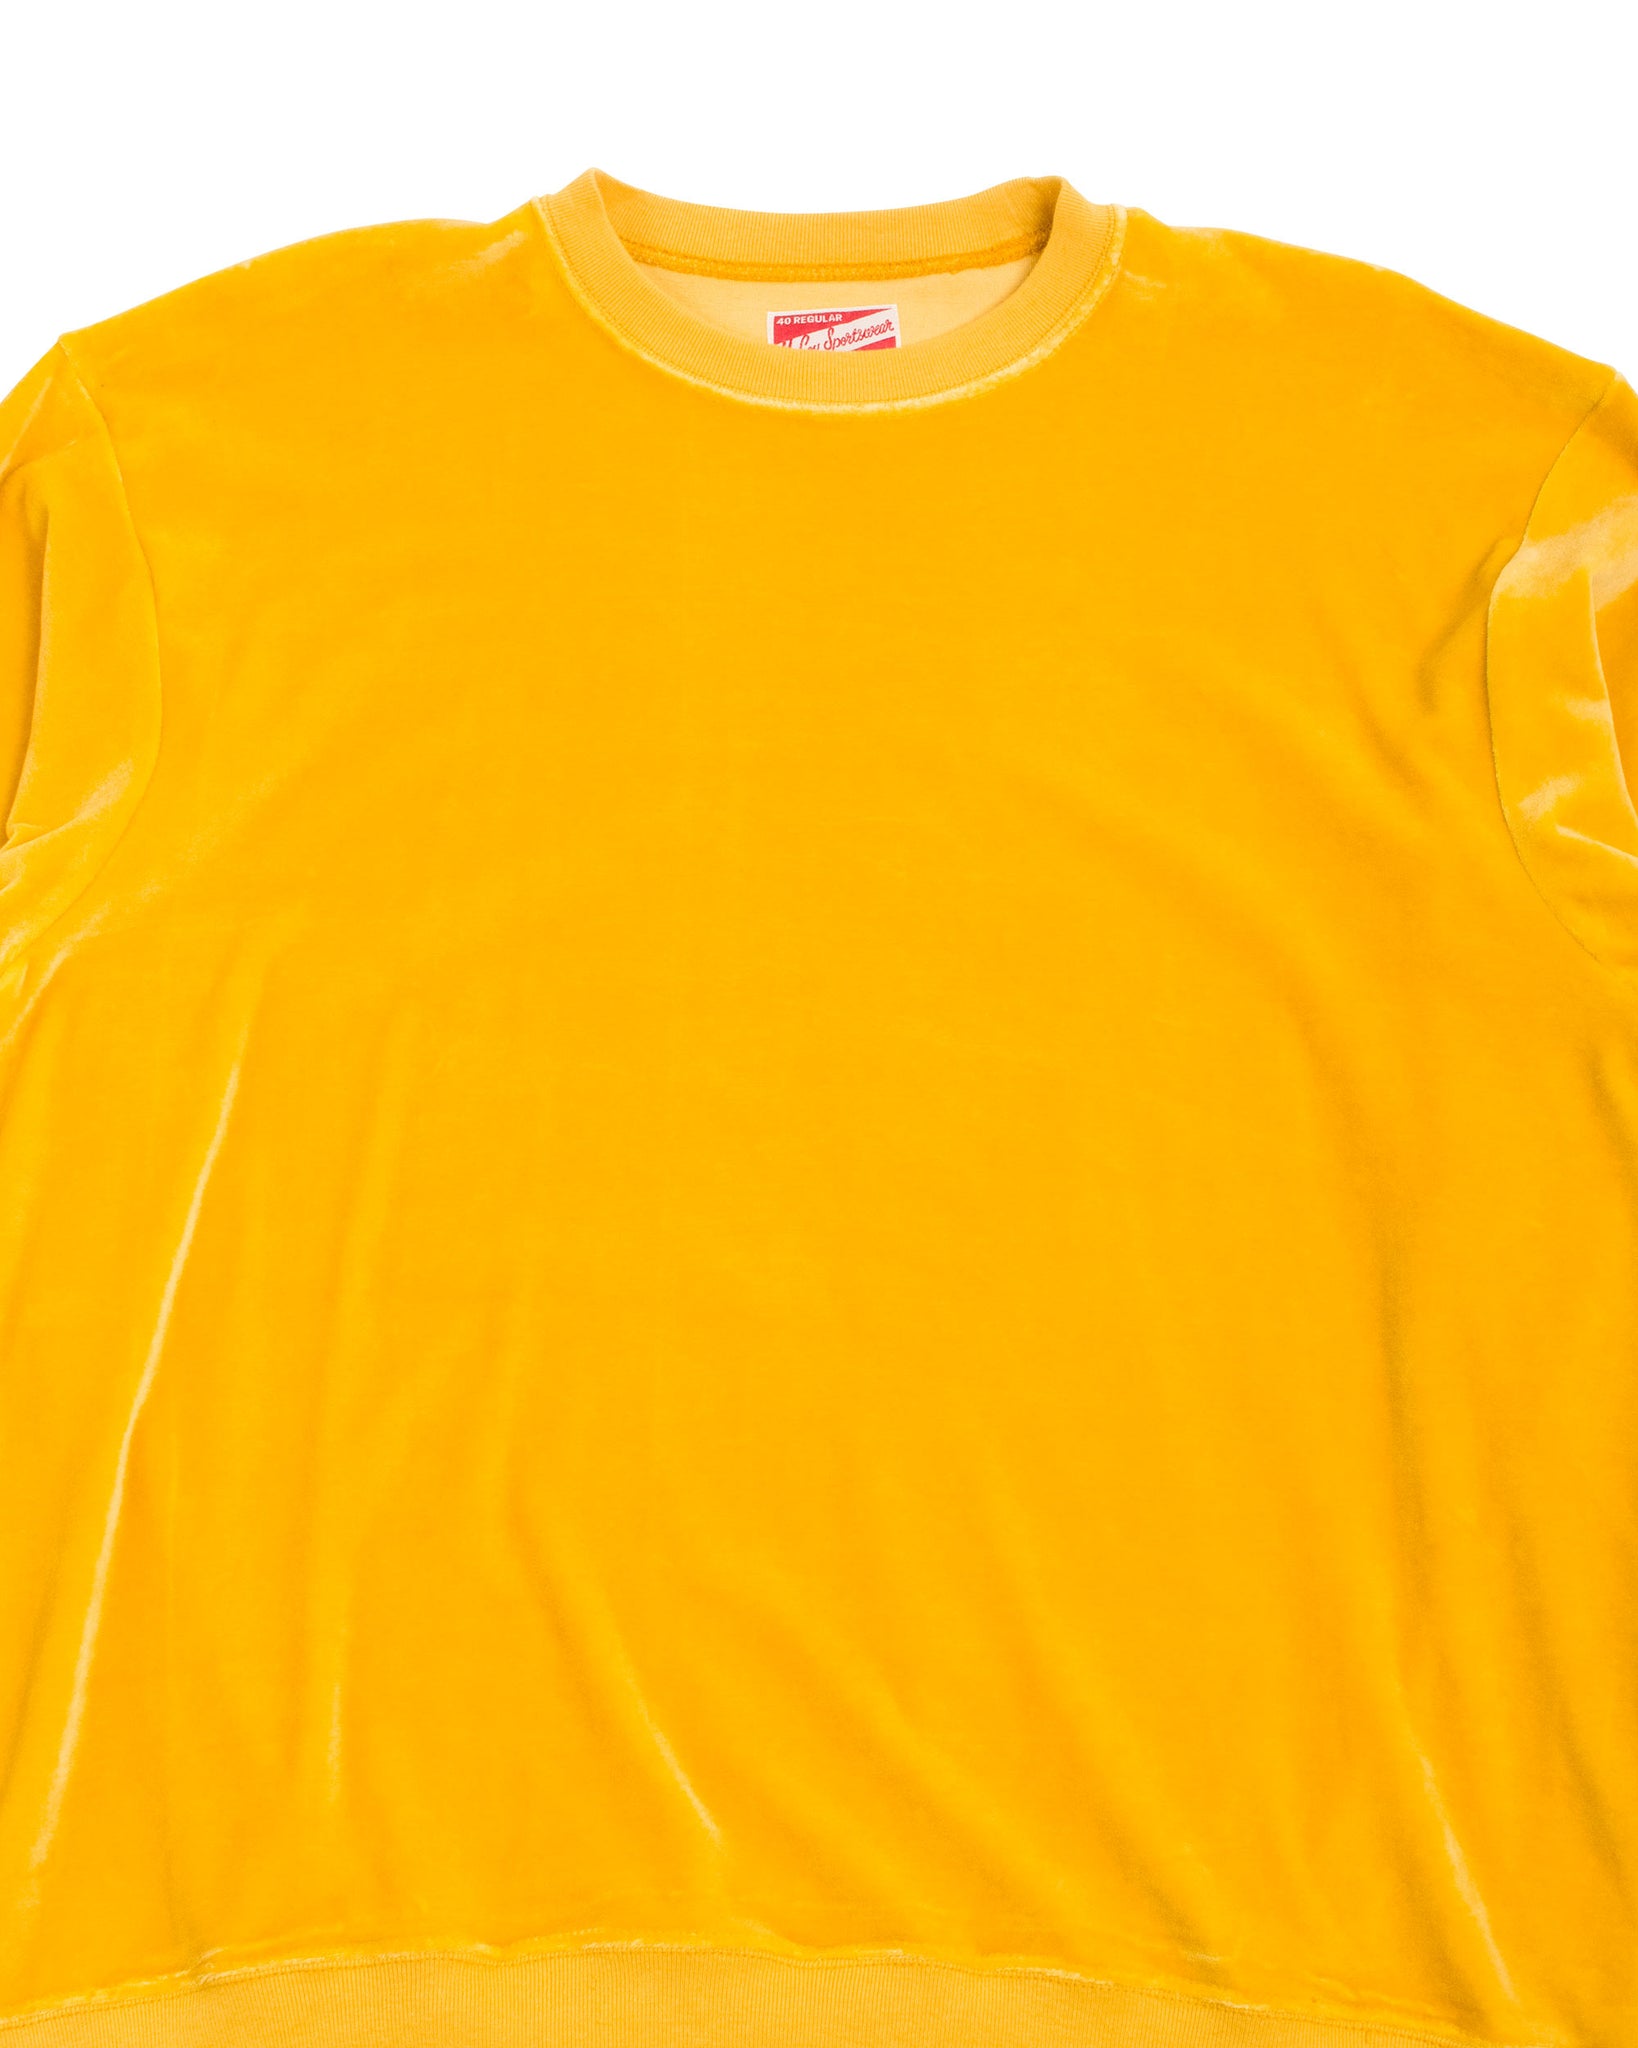 The Real McCoy's MC22002 Cotton Rayon Pile Sweatshirt Yellow Details